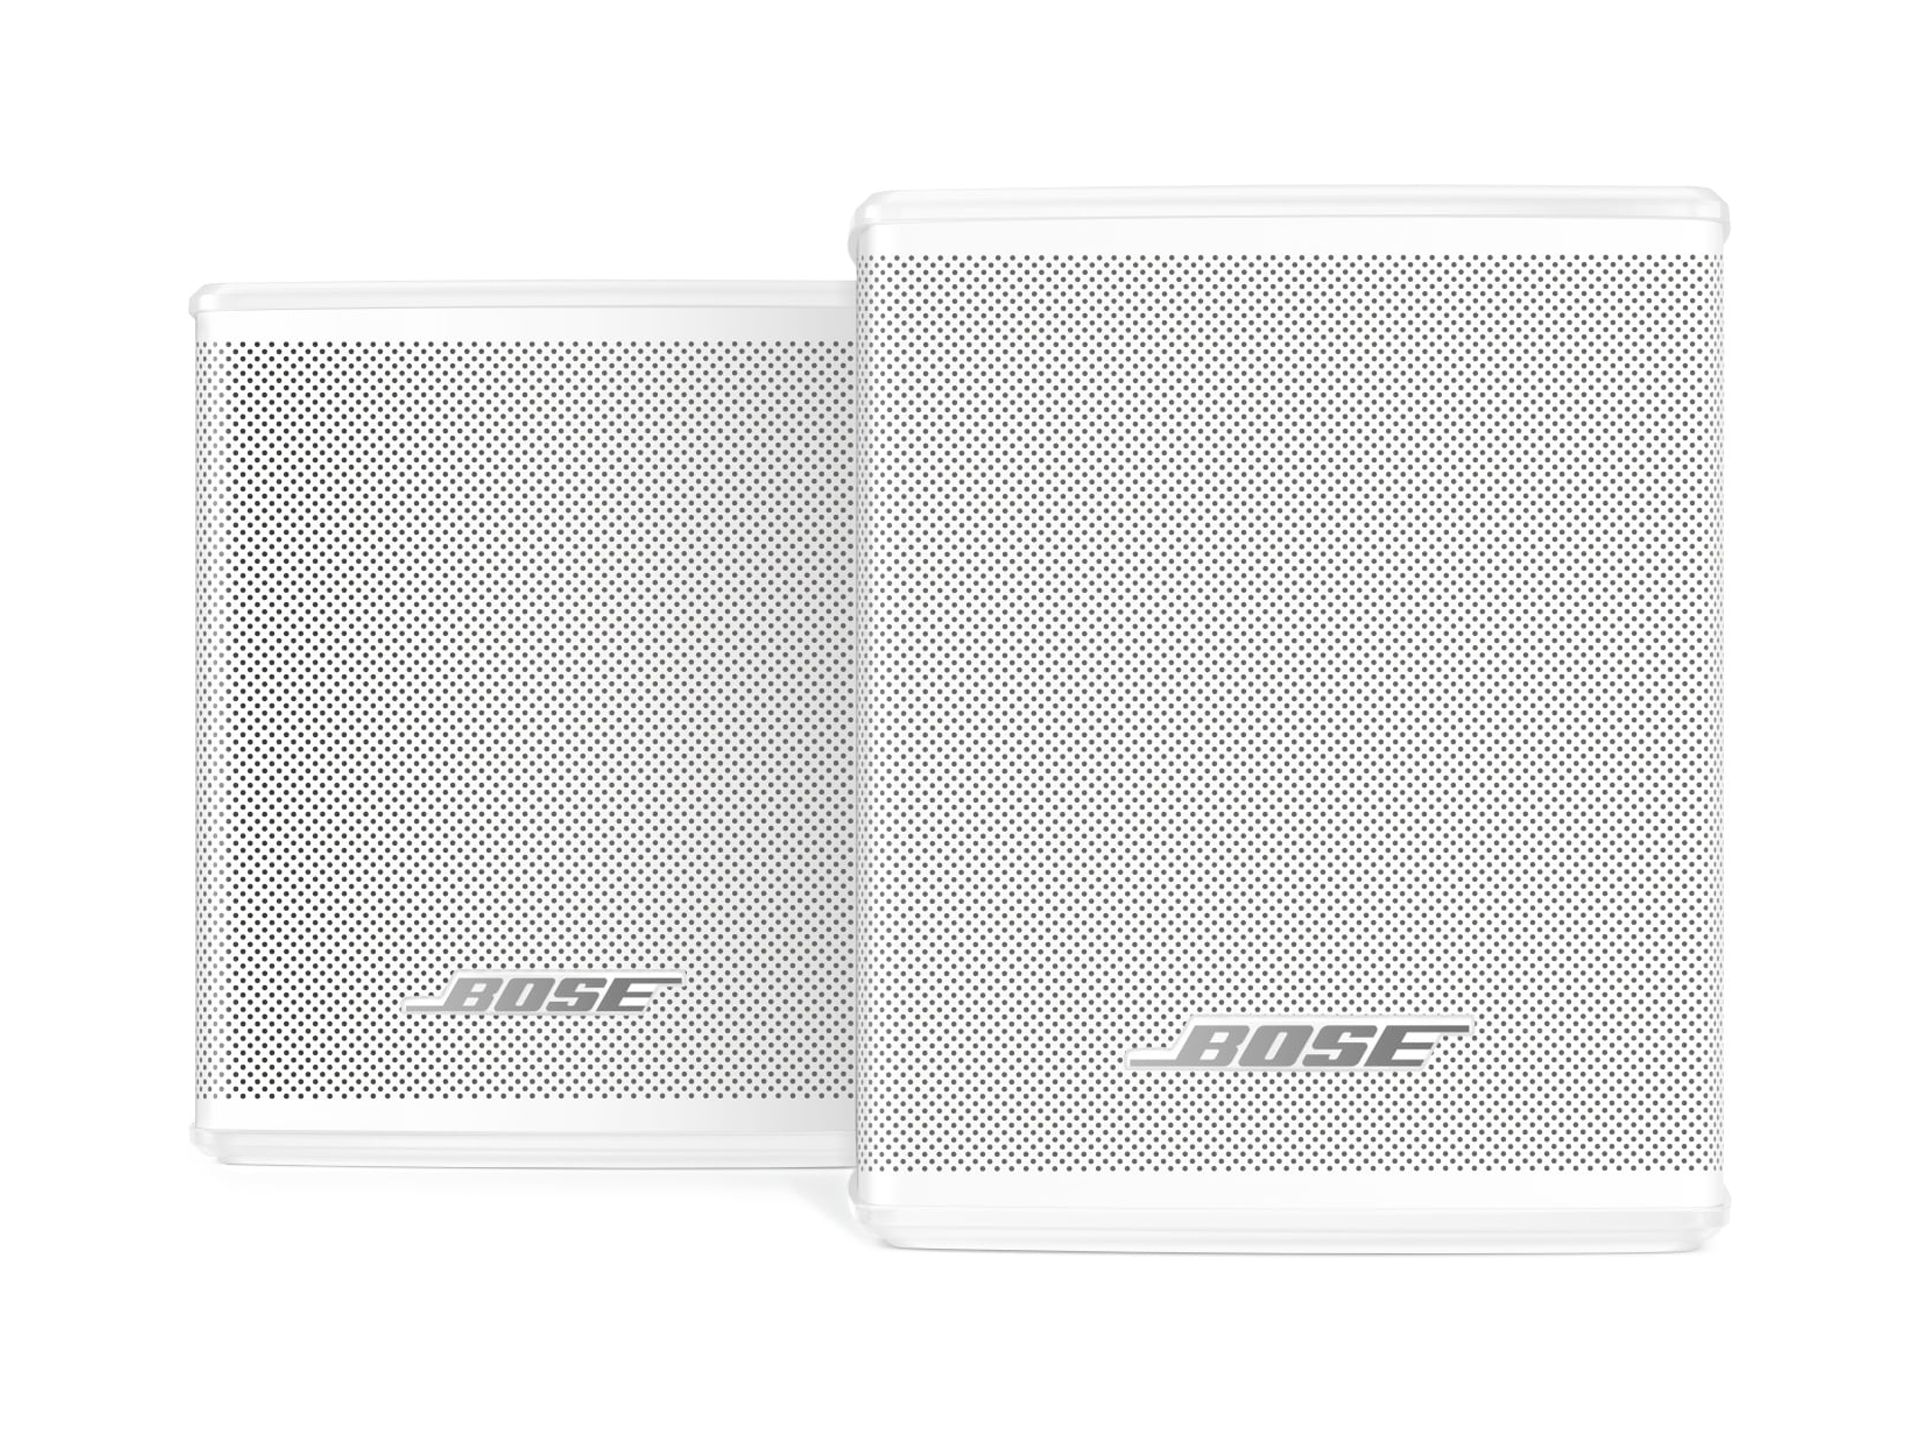 Bose Surround Sound Rear Speakers for Bose Soundbars, White - image 1 of 5